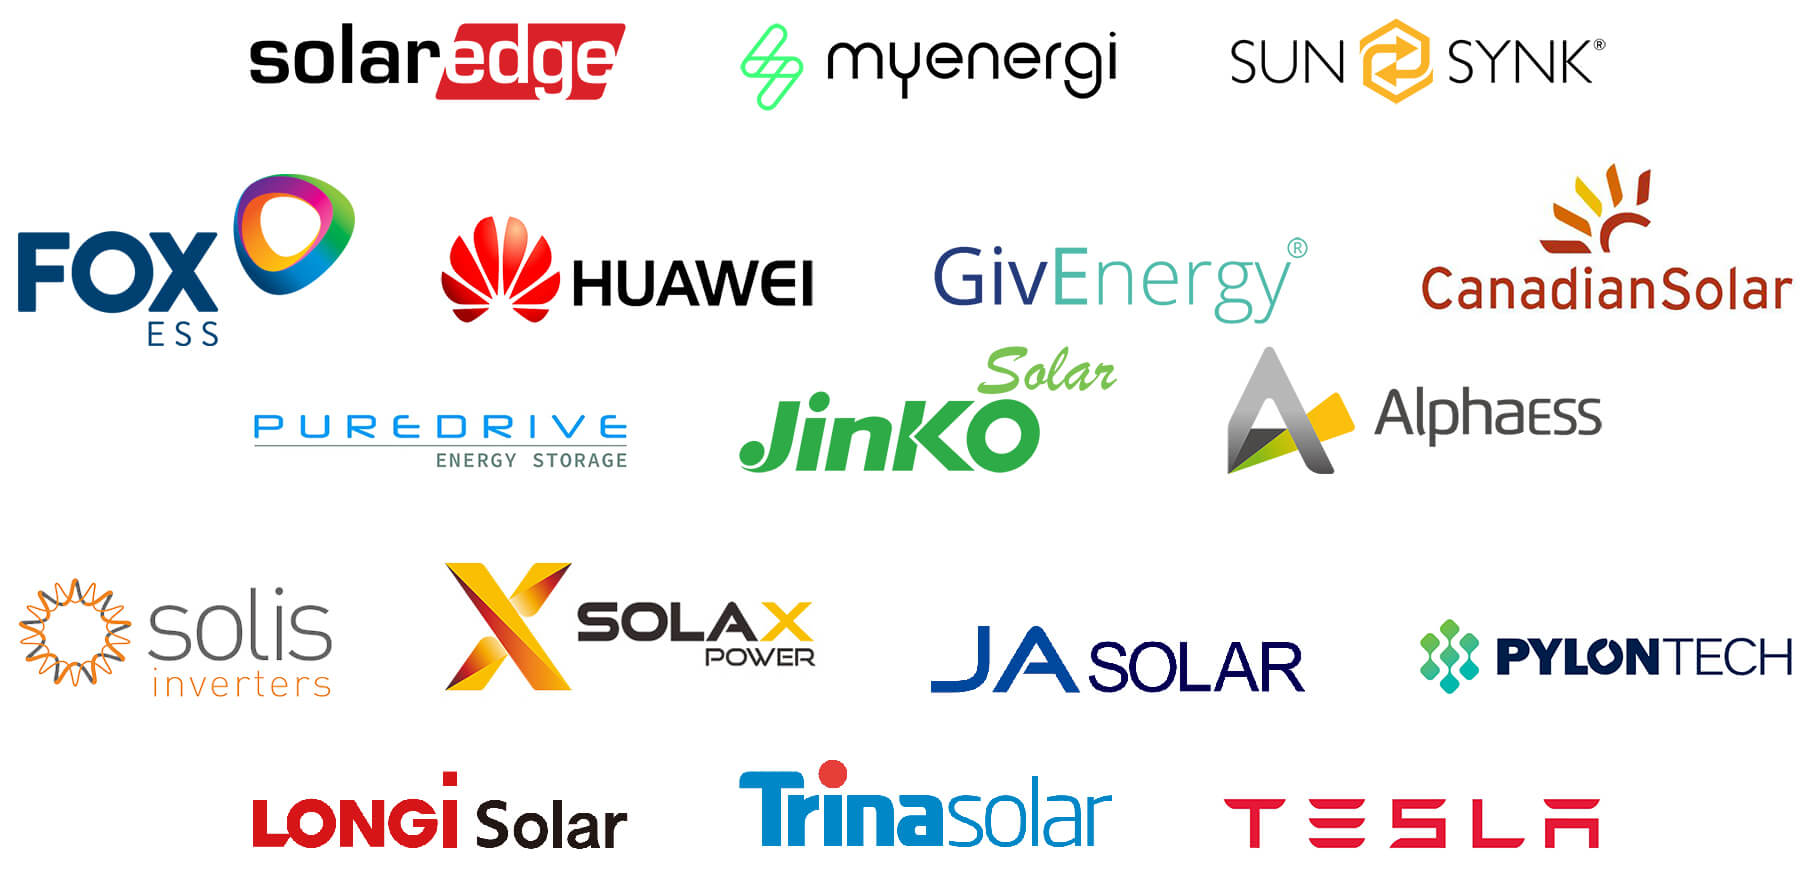 Solar Brands